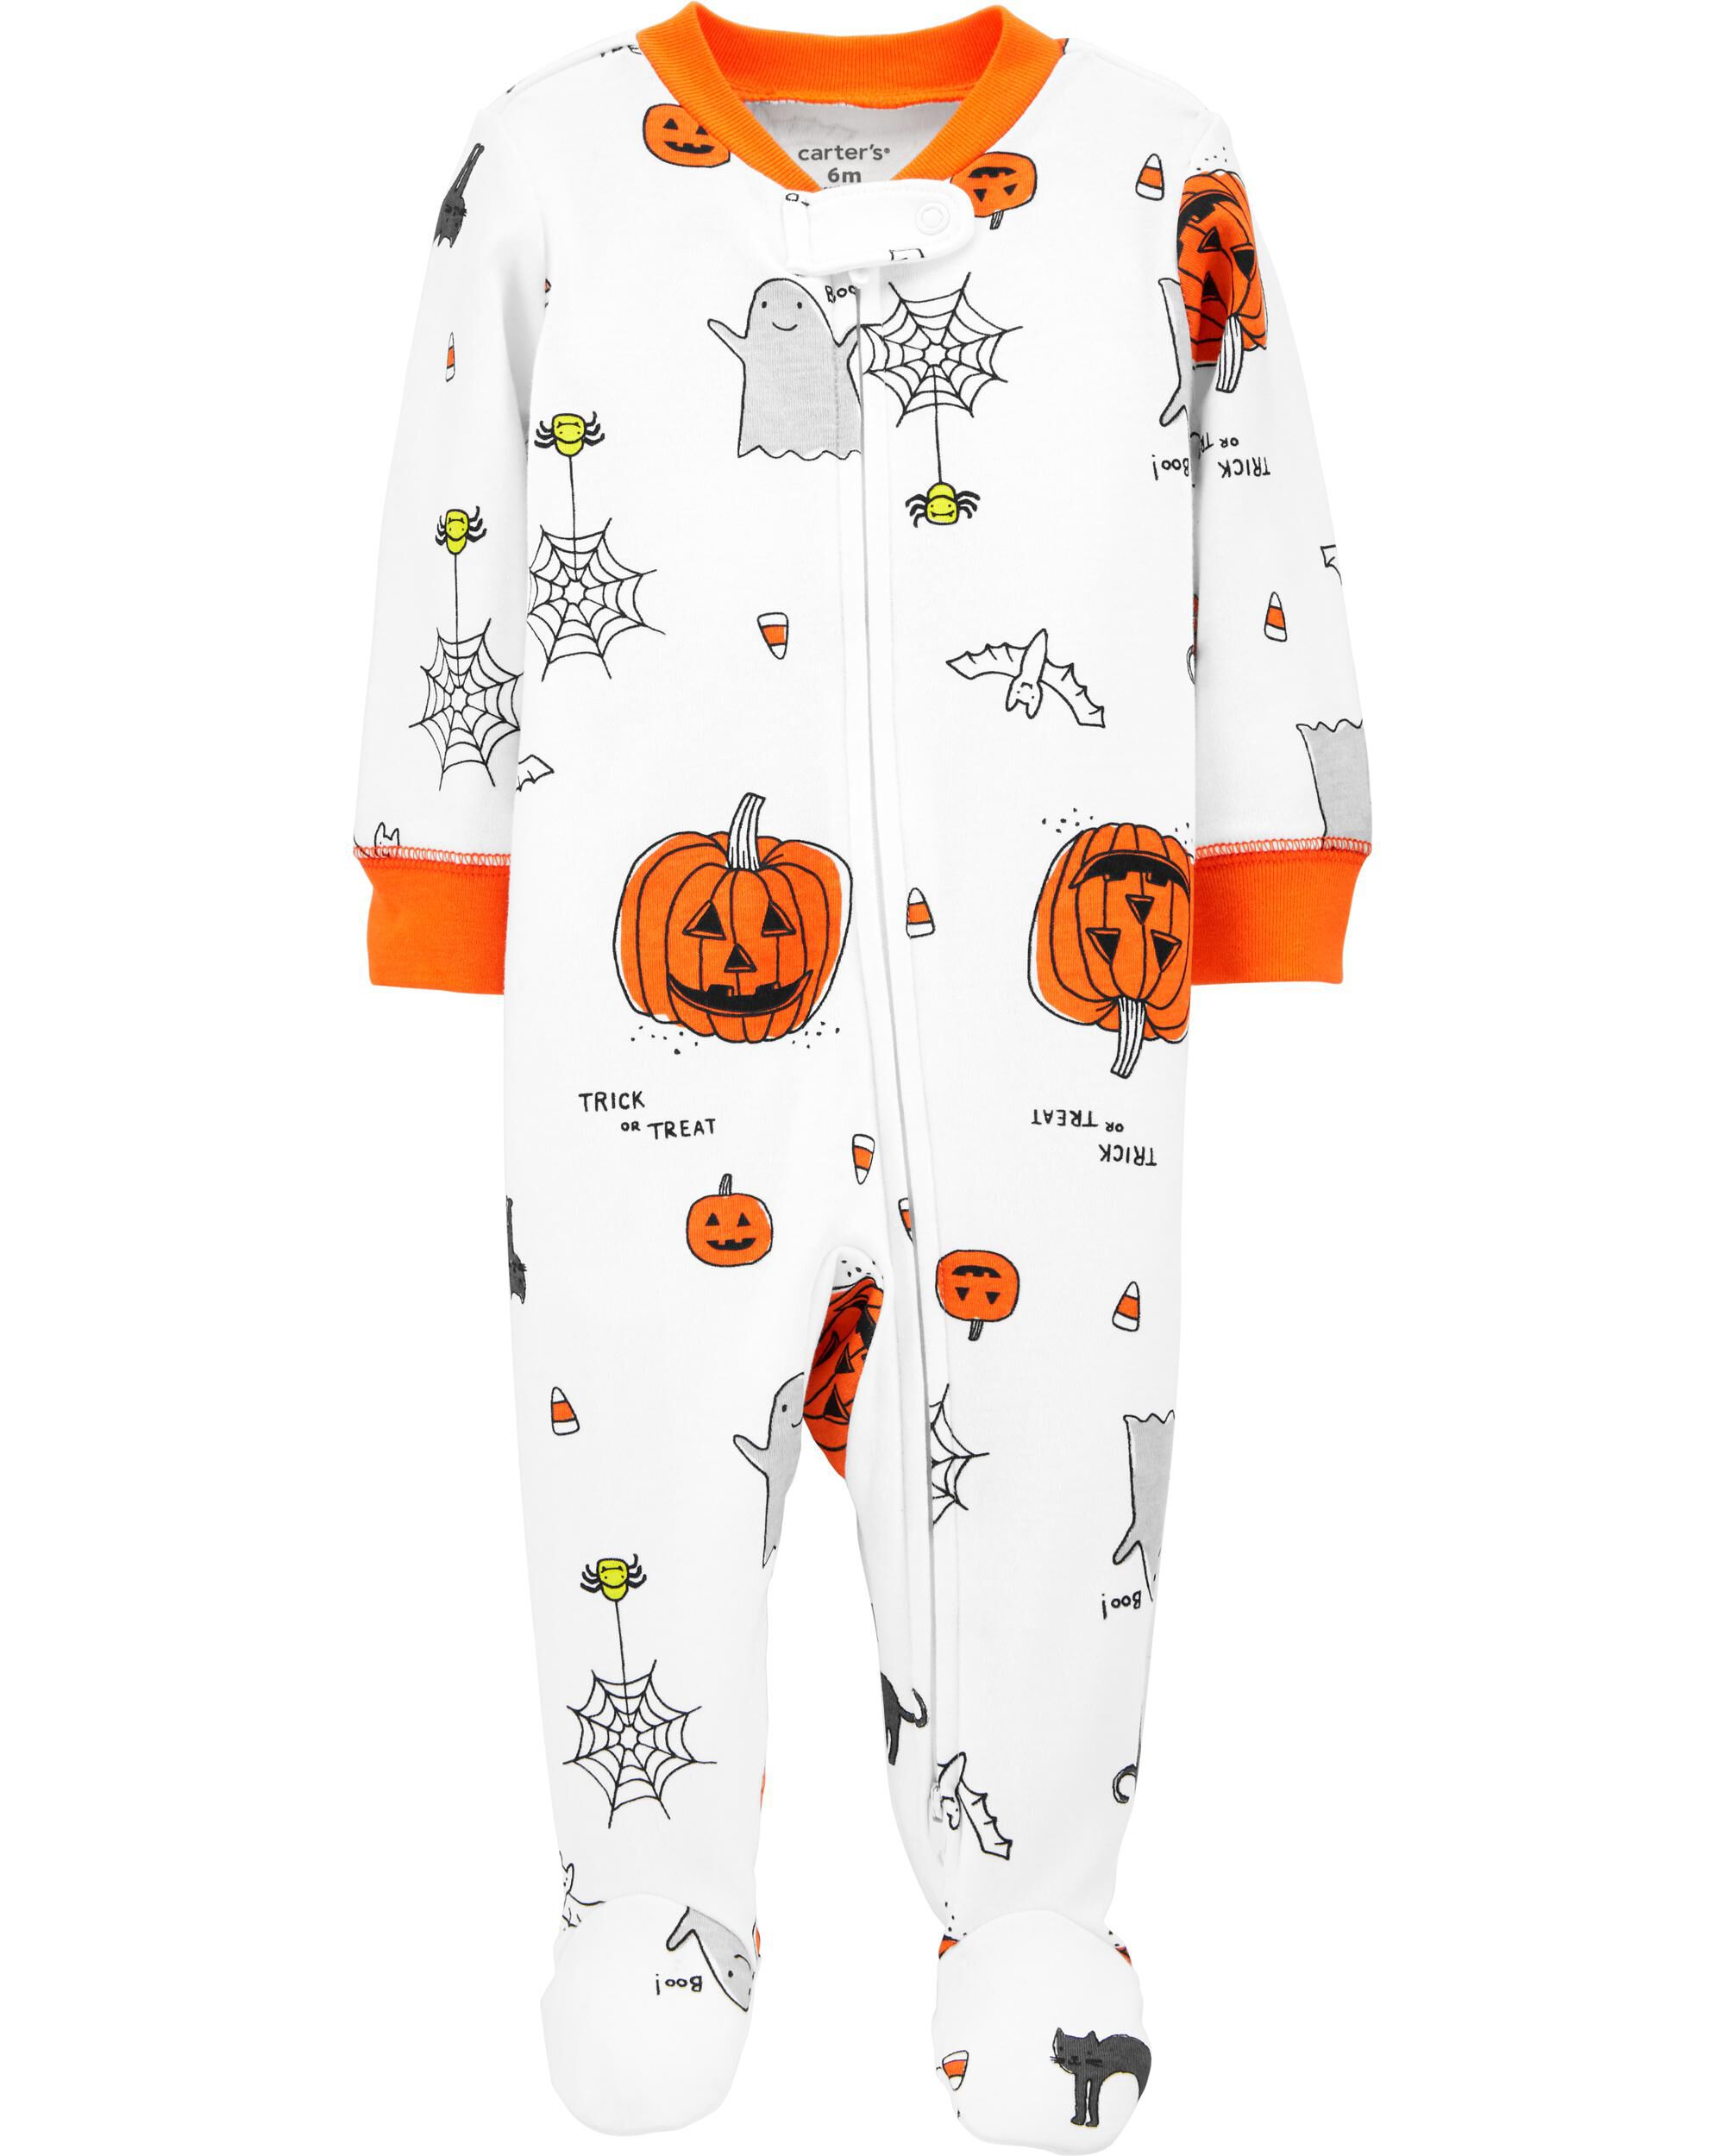 inverted zipper baby pajamas